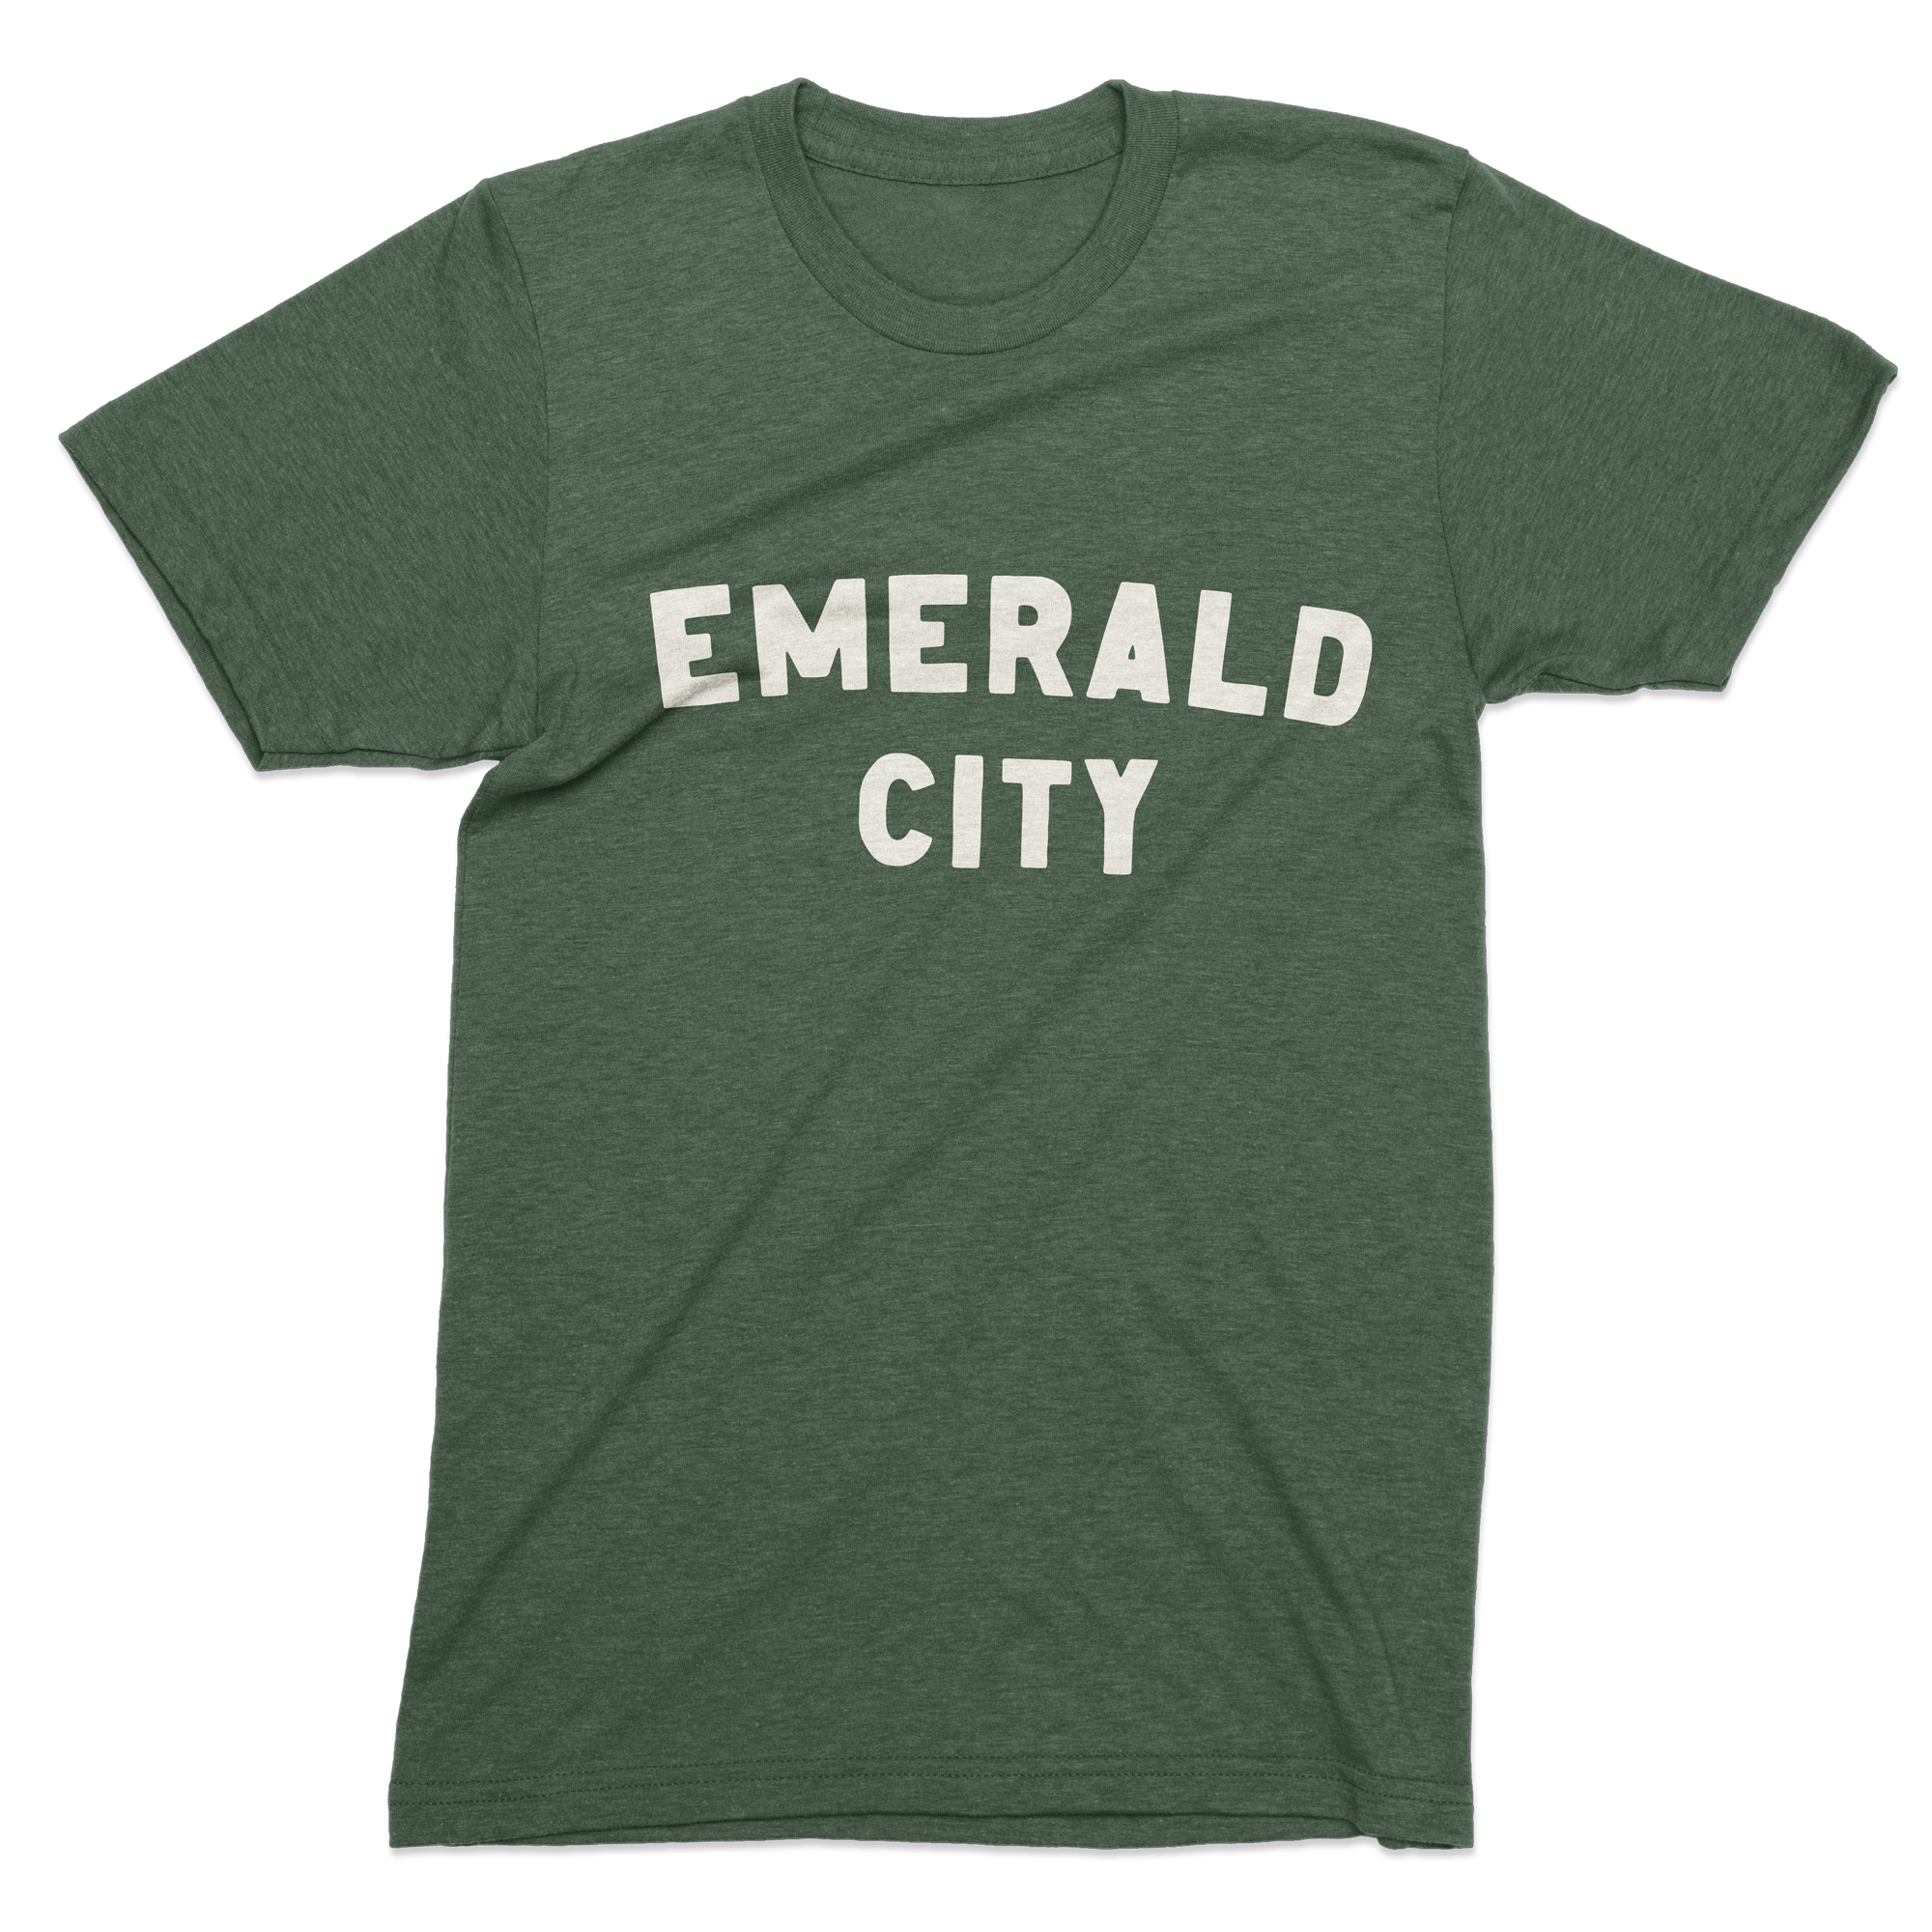 Emerald City tshirt